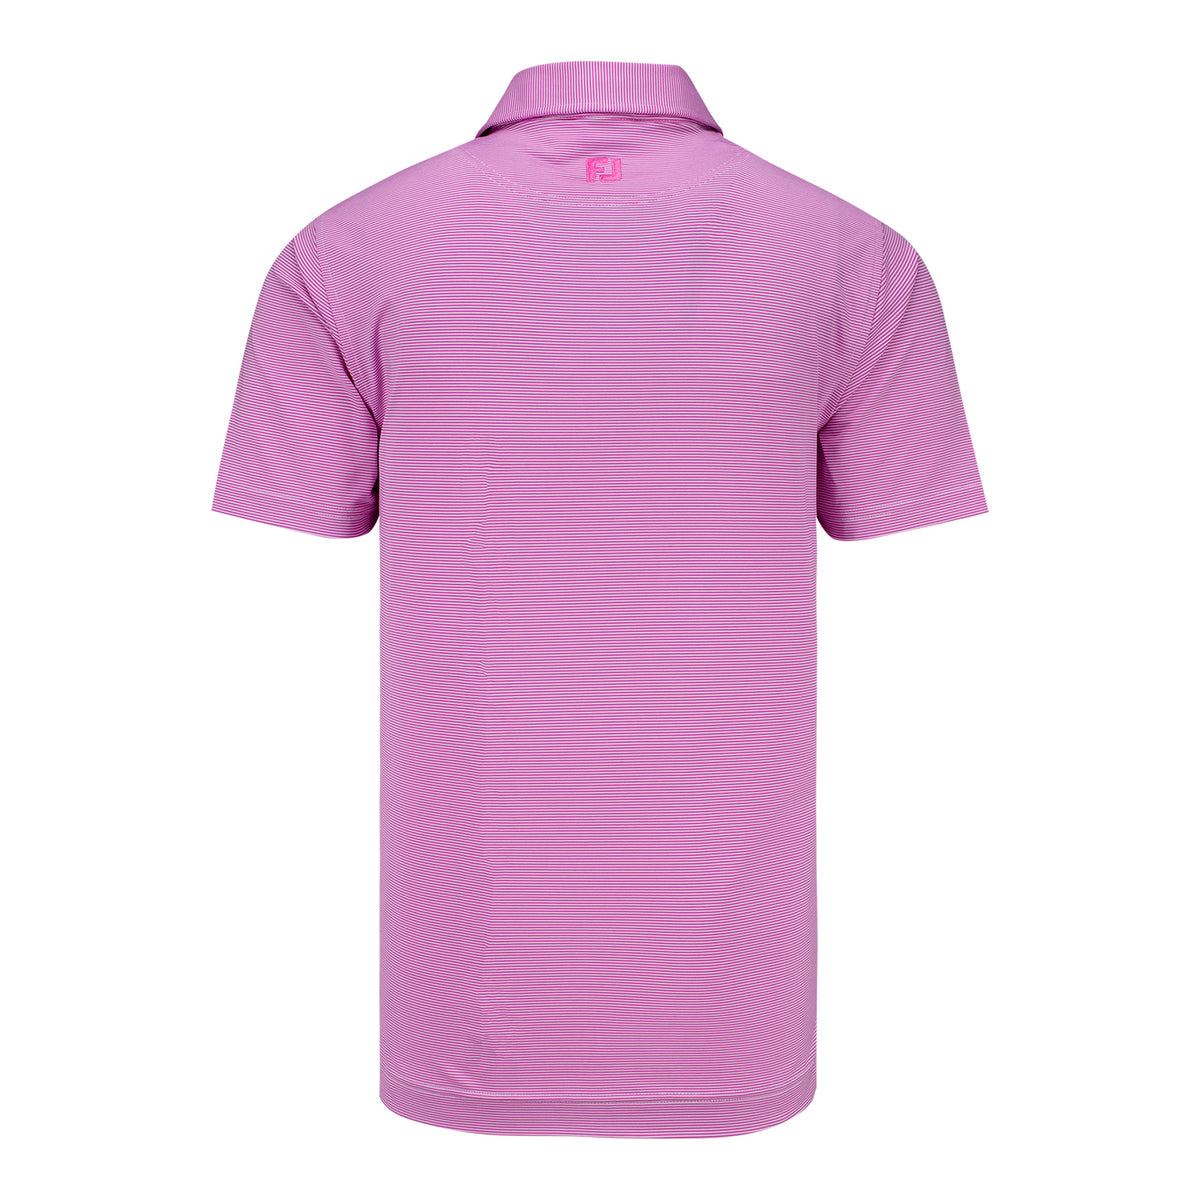 FootJoy 2025 PGA Championship Microstripe Polo in Pink/White - Back View